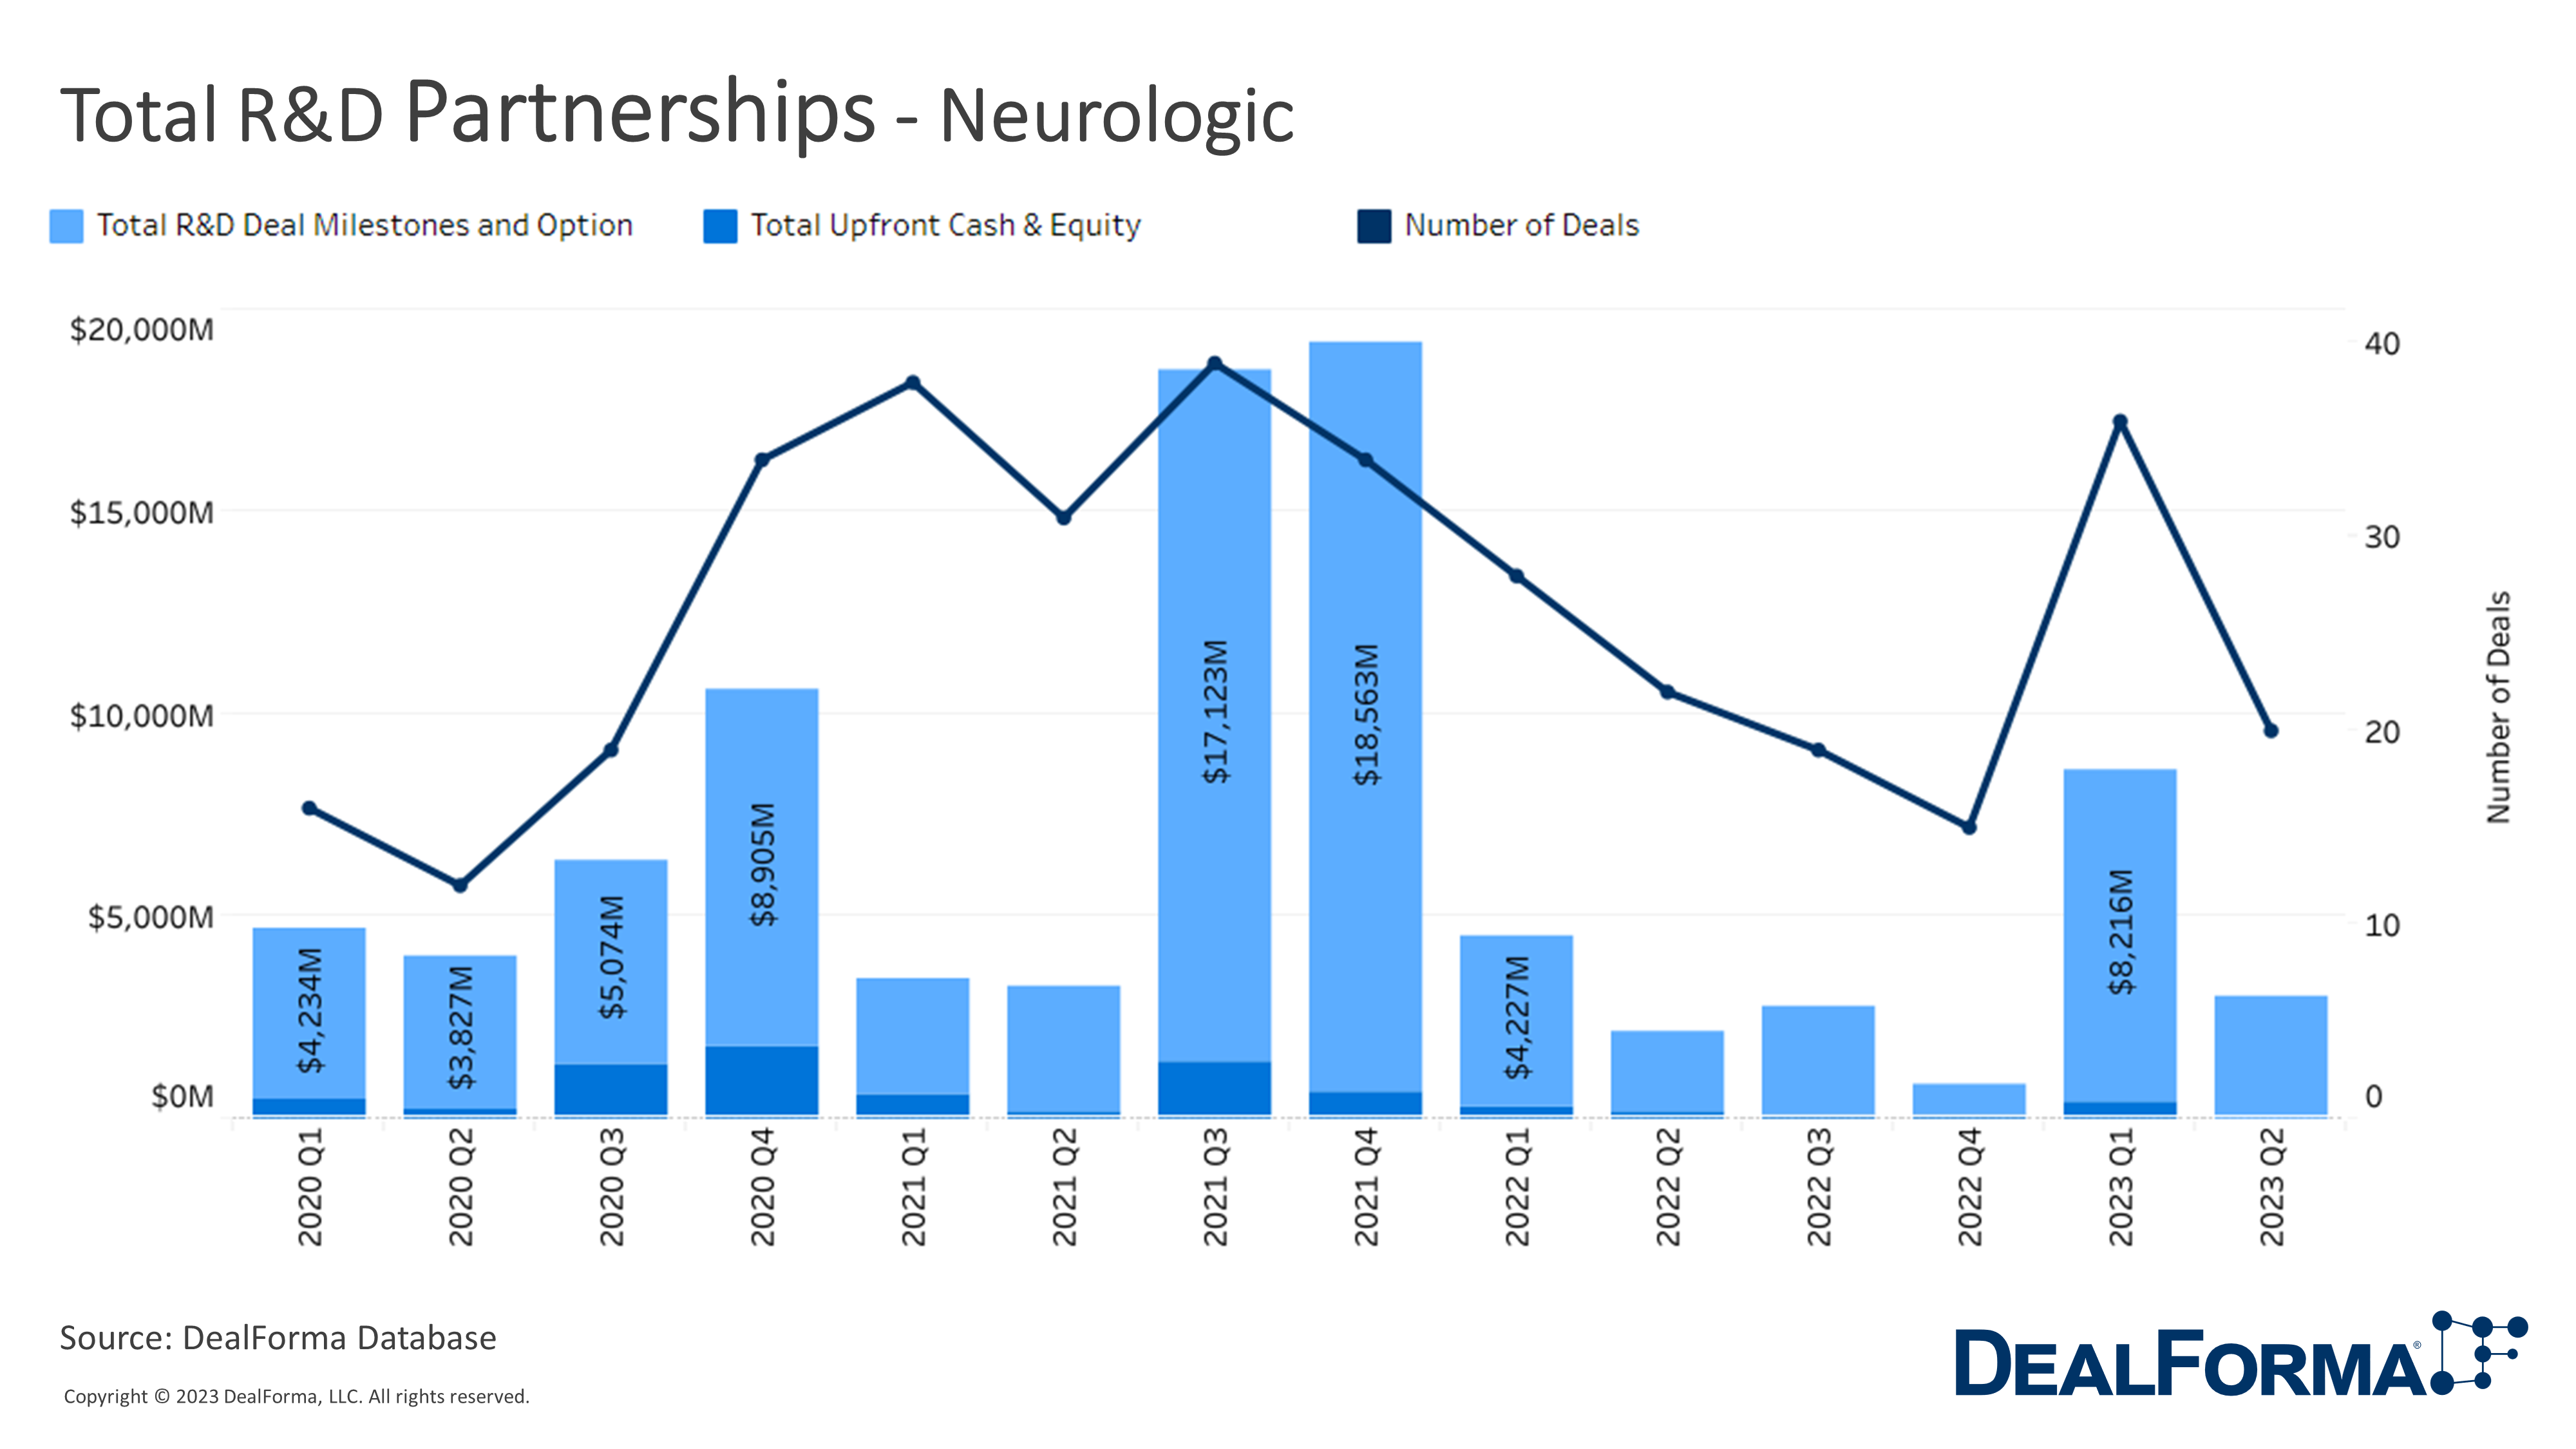 Total R&D Partnerships - Neurologic. DealForma